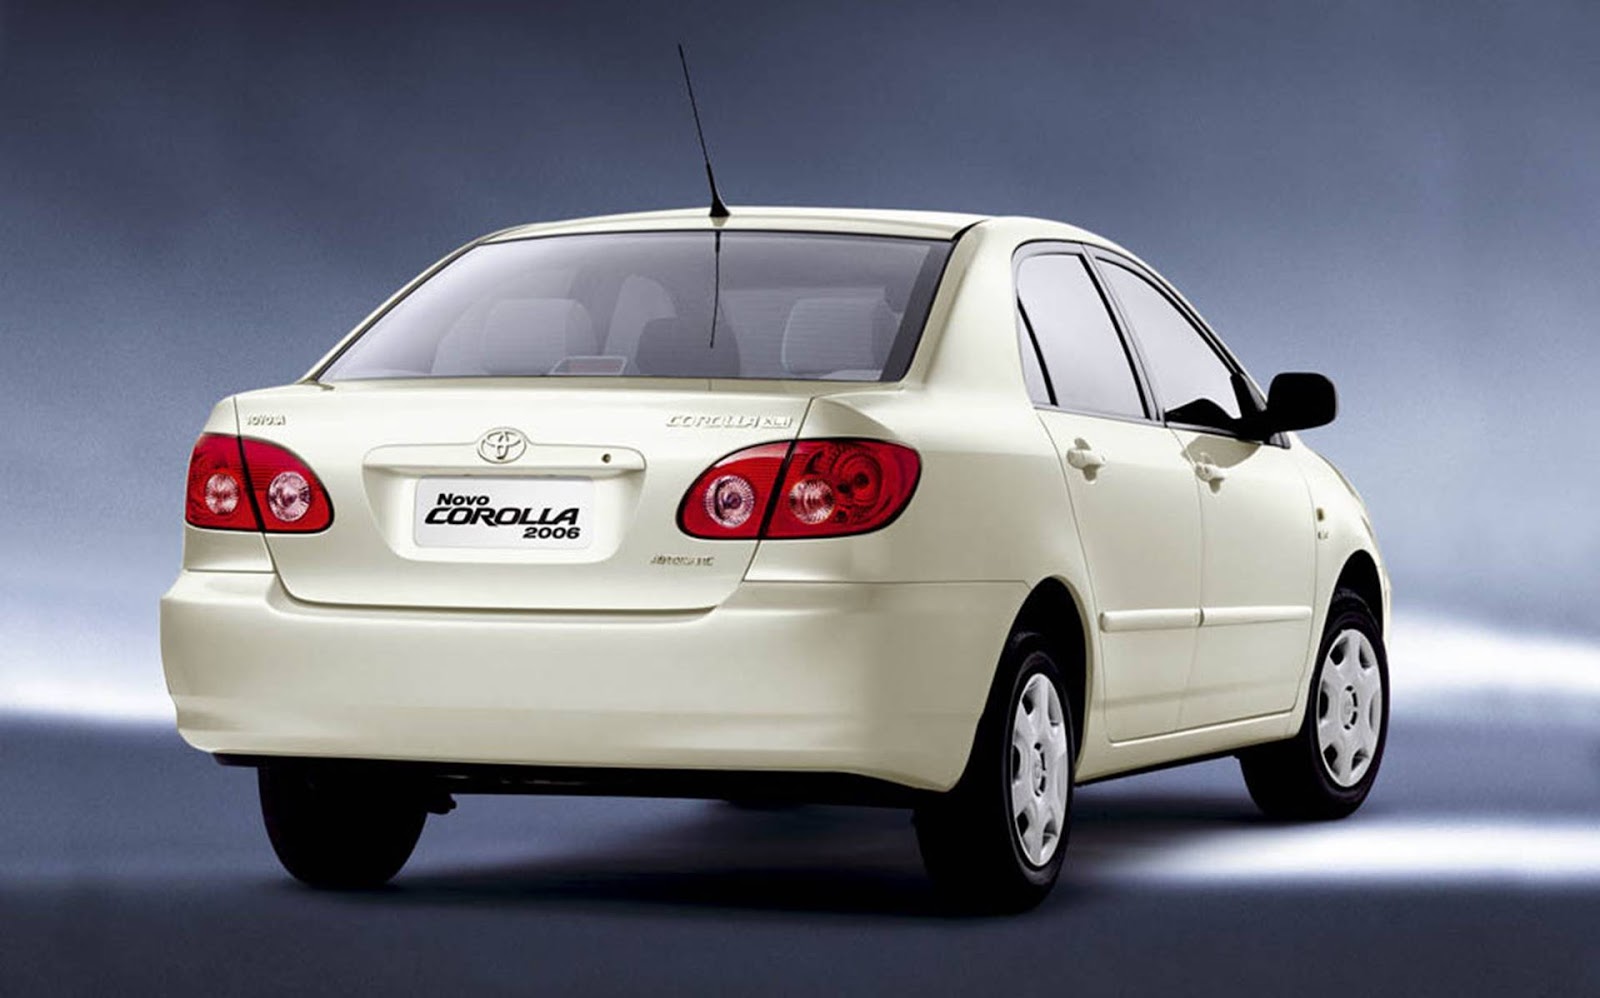 Toyota Corolla 2003 fotos, preços e consumo detalhes